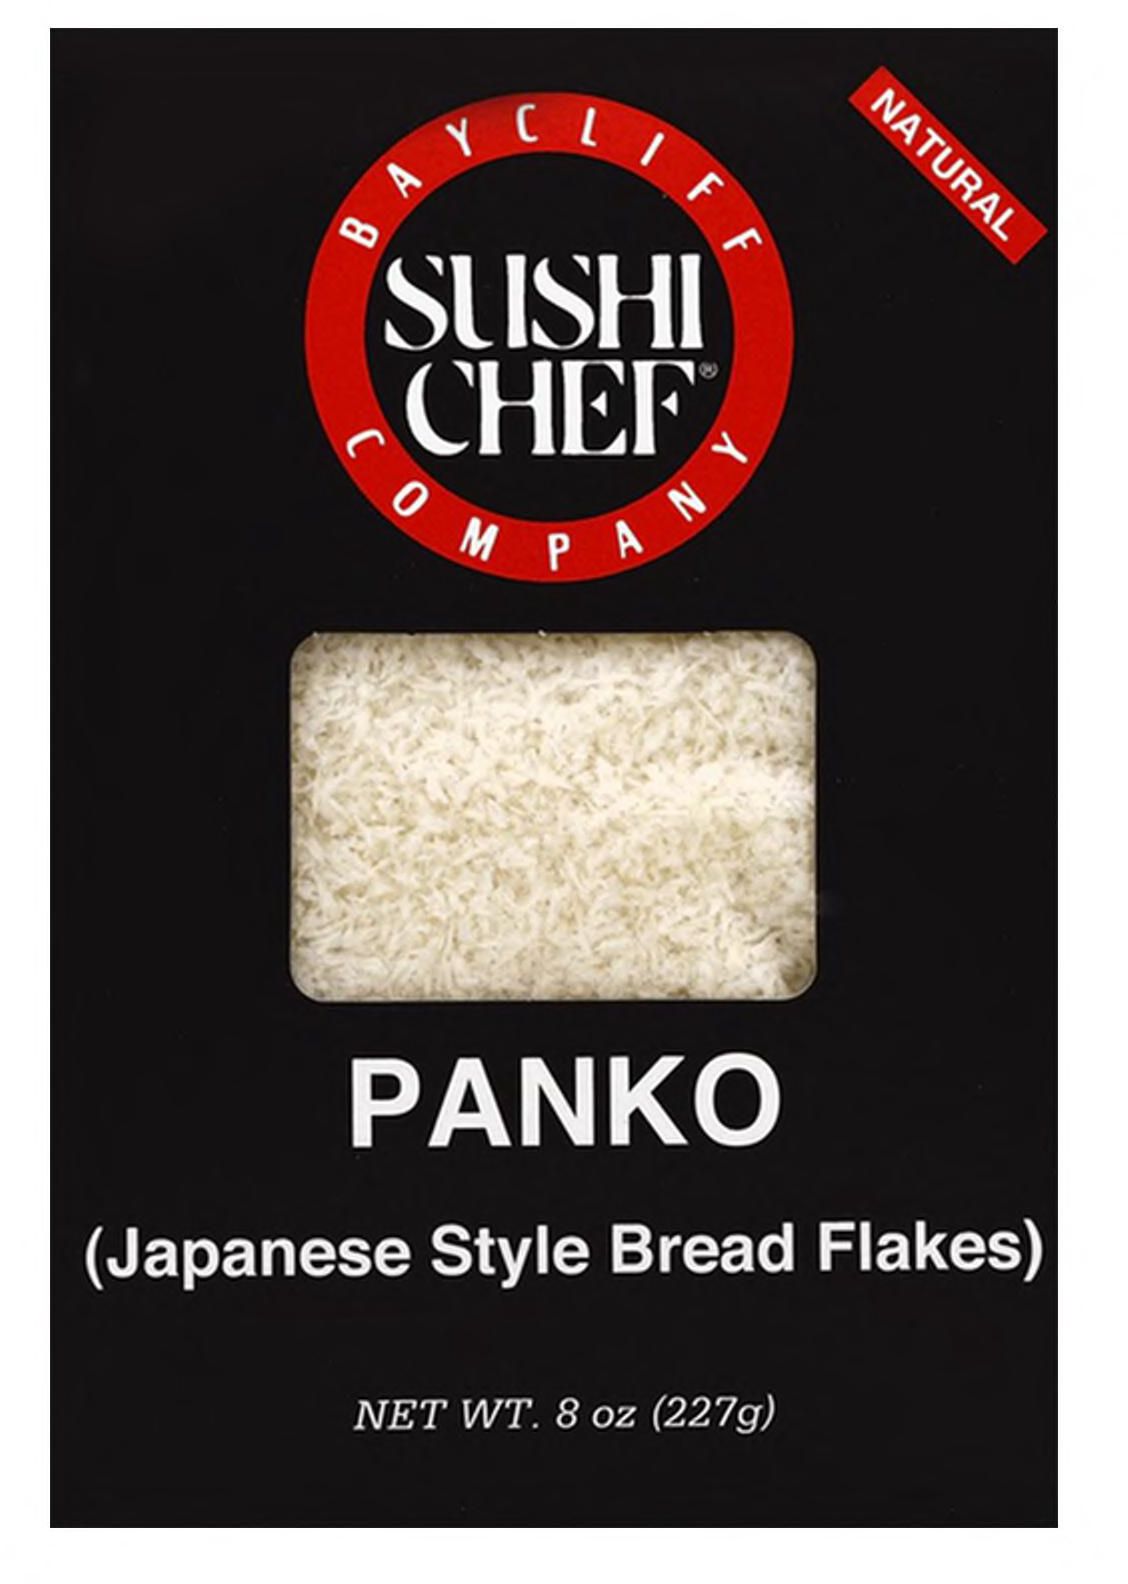 Sushi chef panko bread flakes 227g